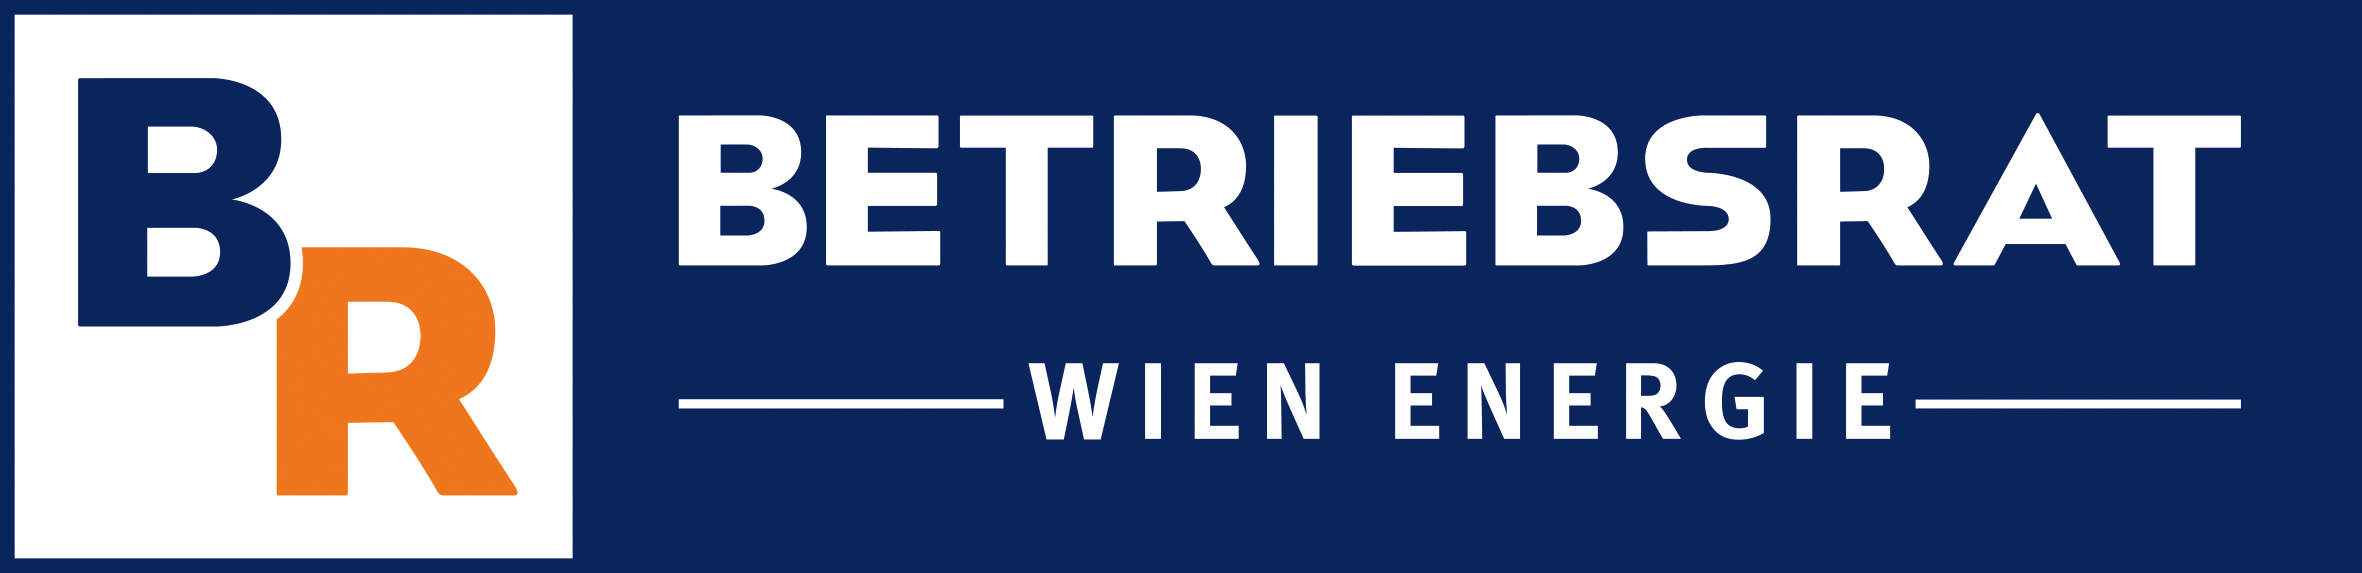 Logo BR - Betriebsrat Wien Energie (blau/weiß/orange)